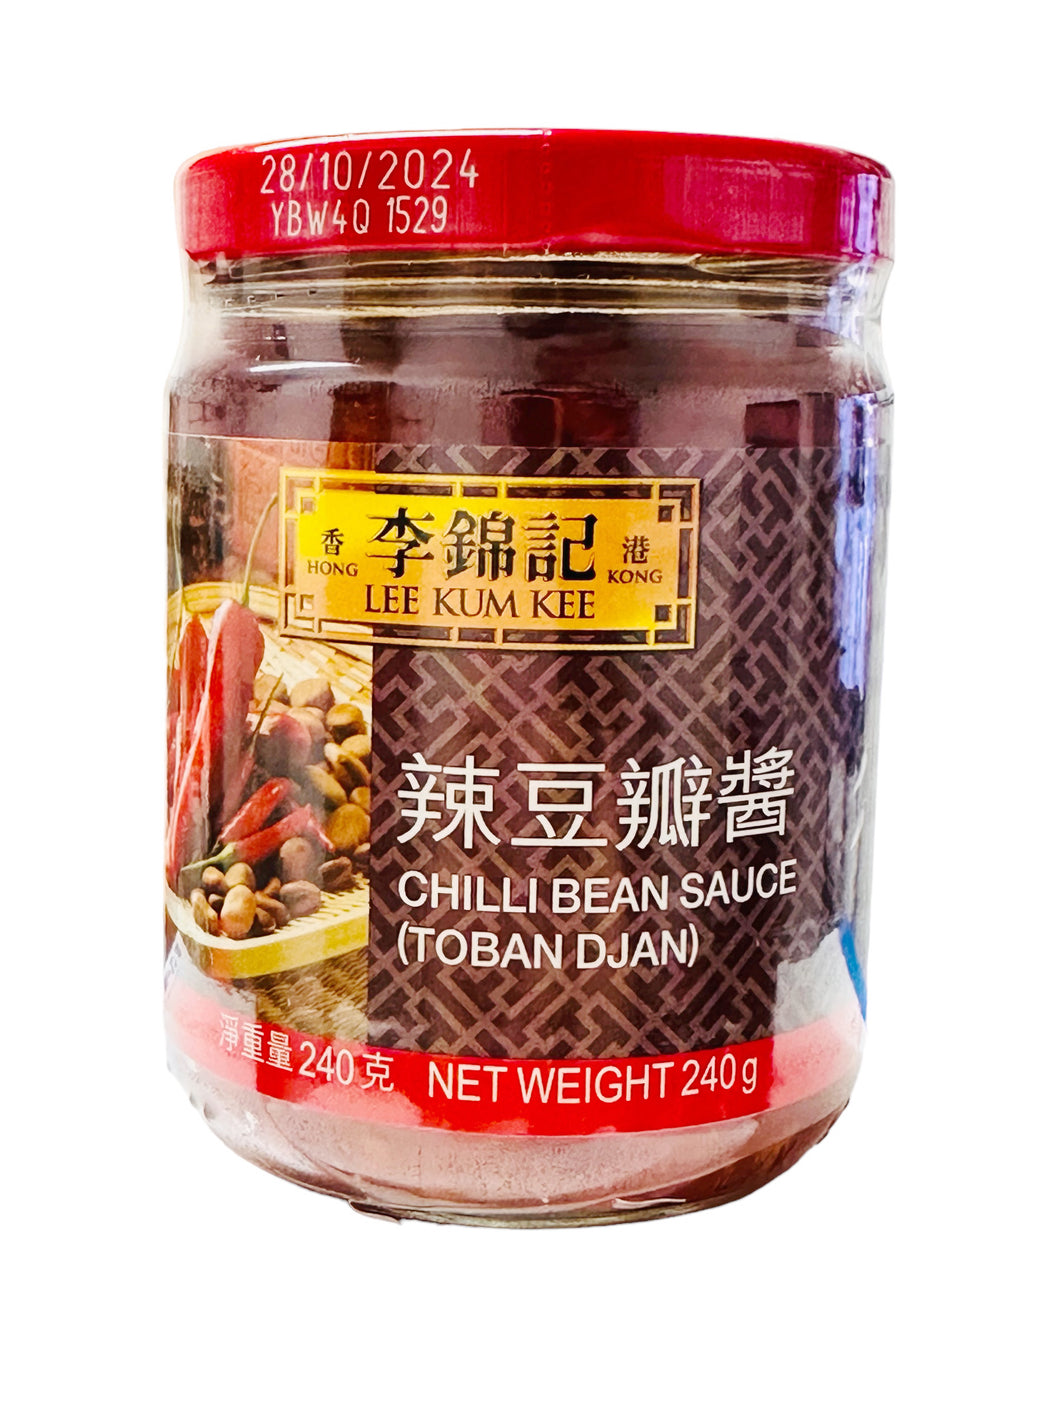 LKK Chili Bean Sauce 240g李锦记辣豆瓣酱